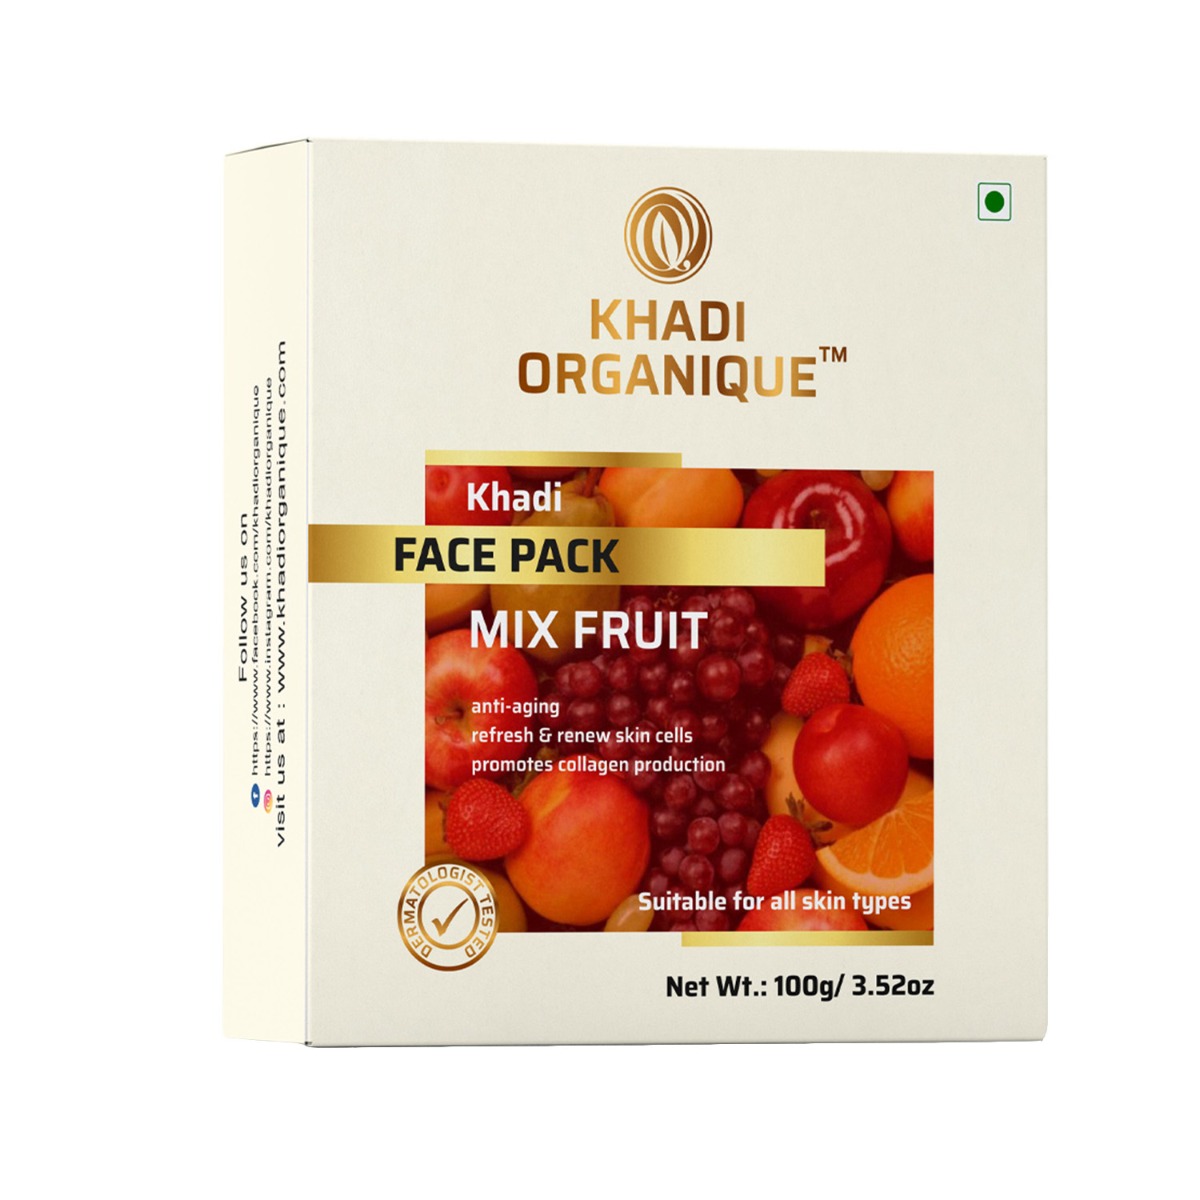 Khadi Organique Mix Fruit Face Pack, 100gm